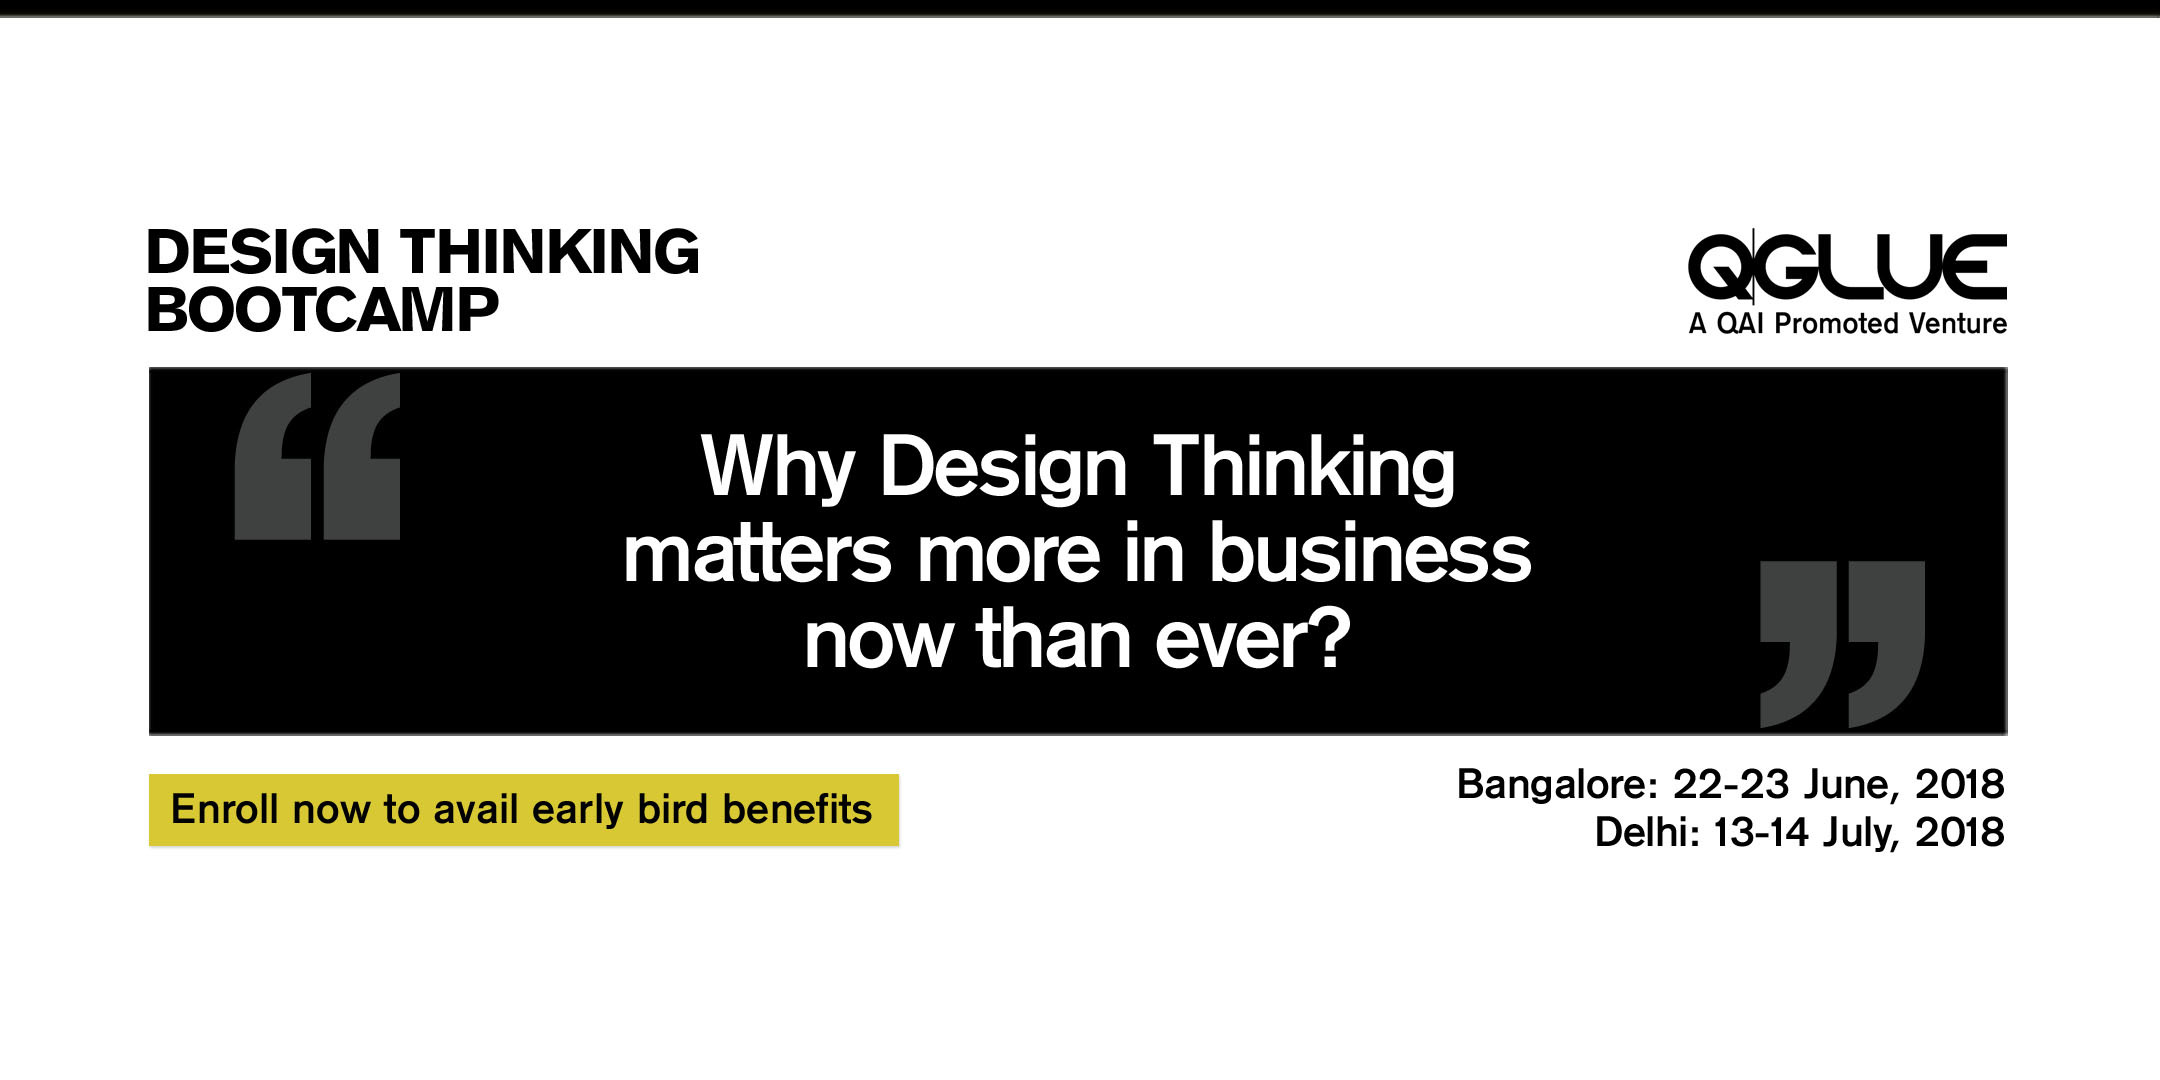 Design Thinking Bootcamp By David P. Issac, Bangalore, Karnataka, India